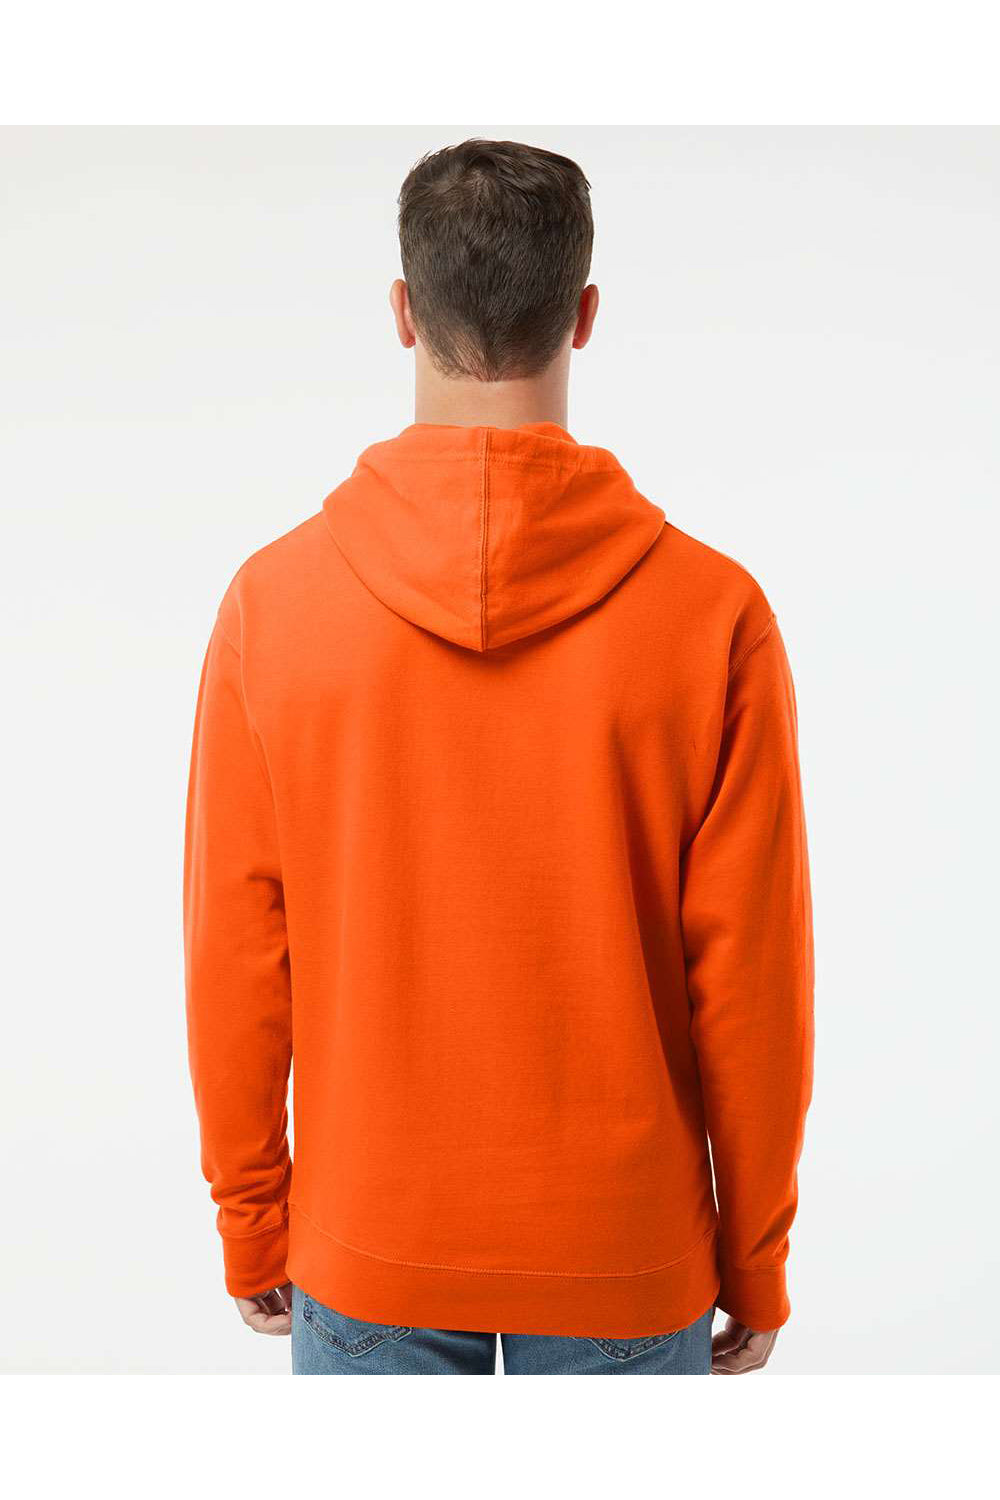 Independent Trading Co. SS4500 Mens Hooded Sweatshirt Hoodie Orange Model Back